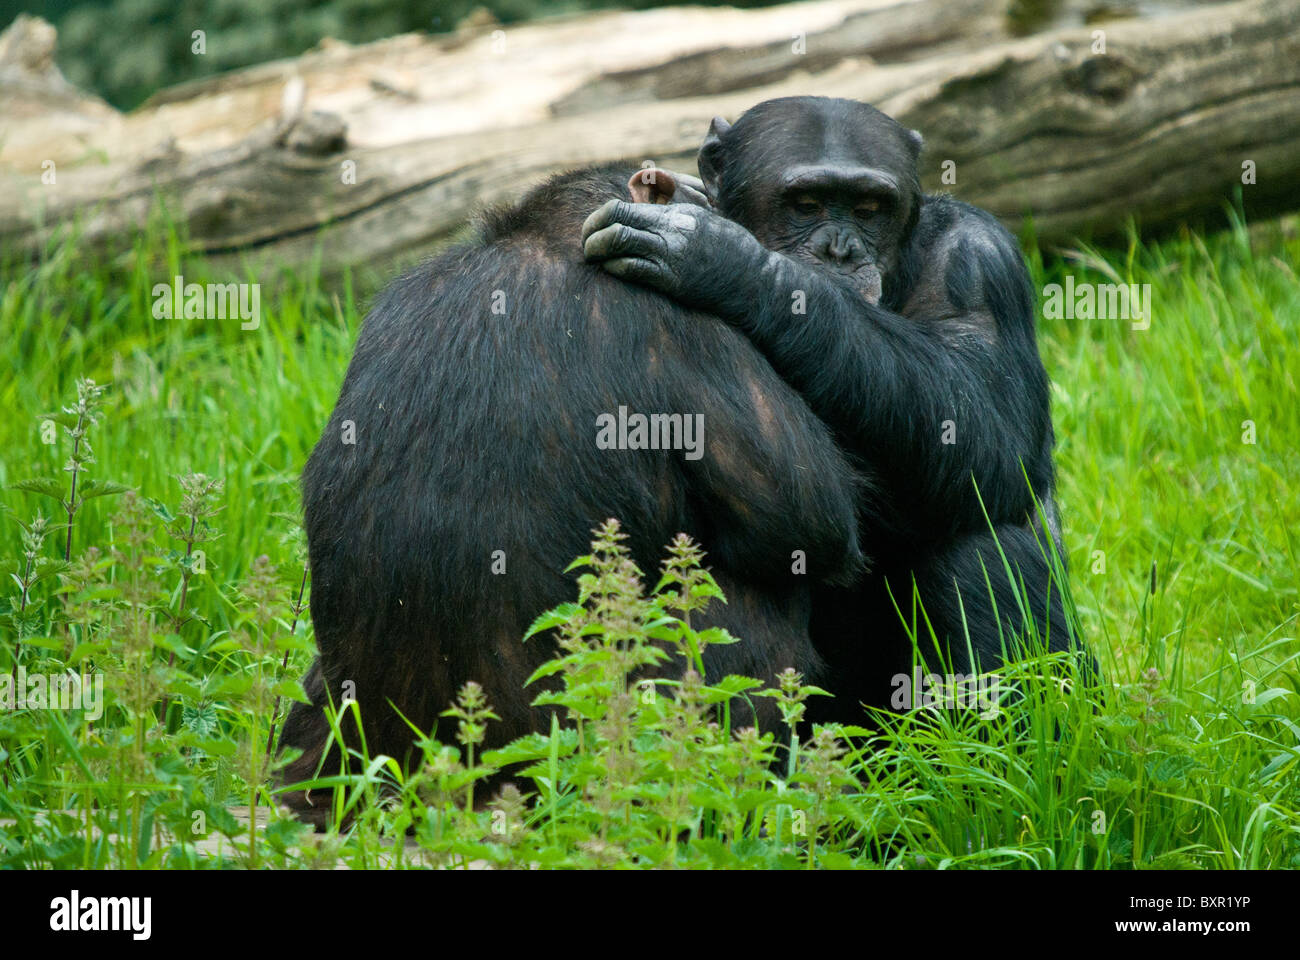 Two Chimpanzees in Captivity cuddling Stock Photo